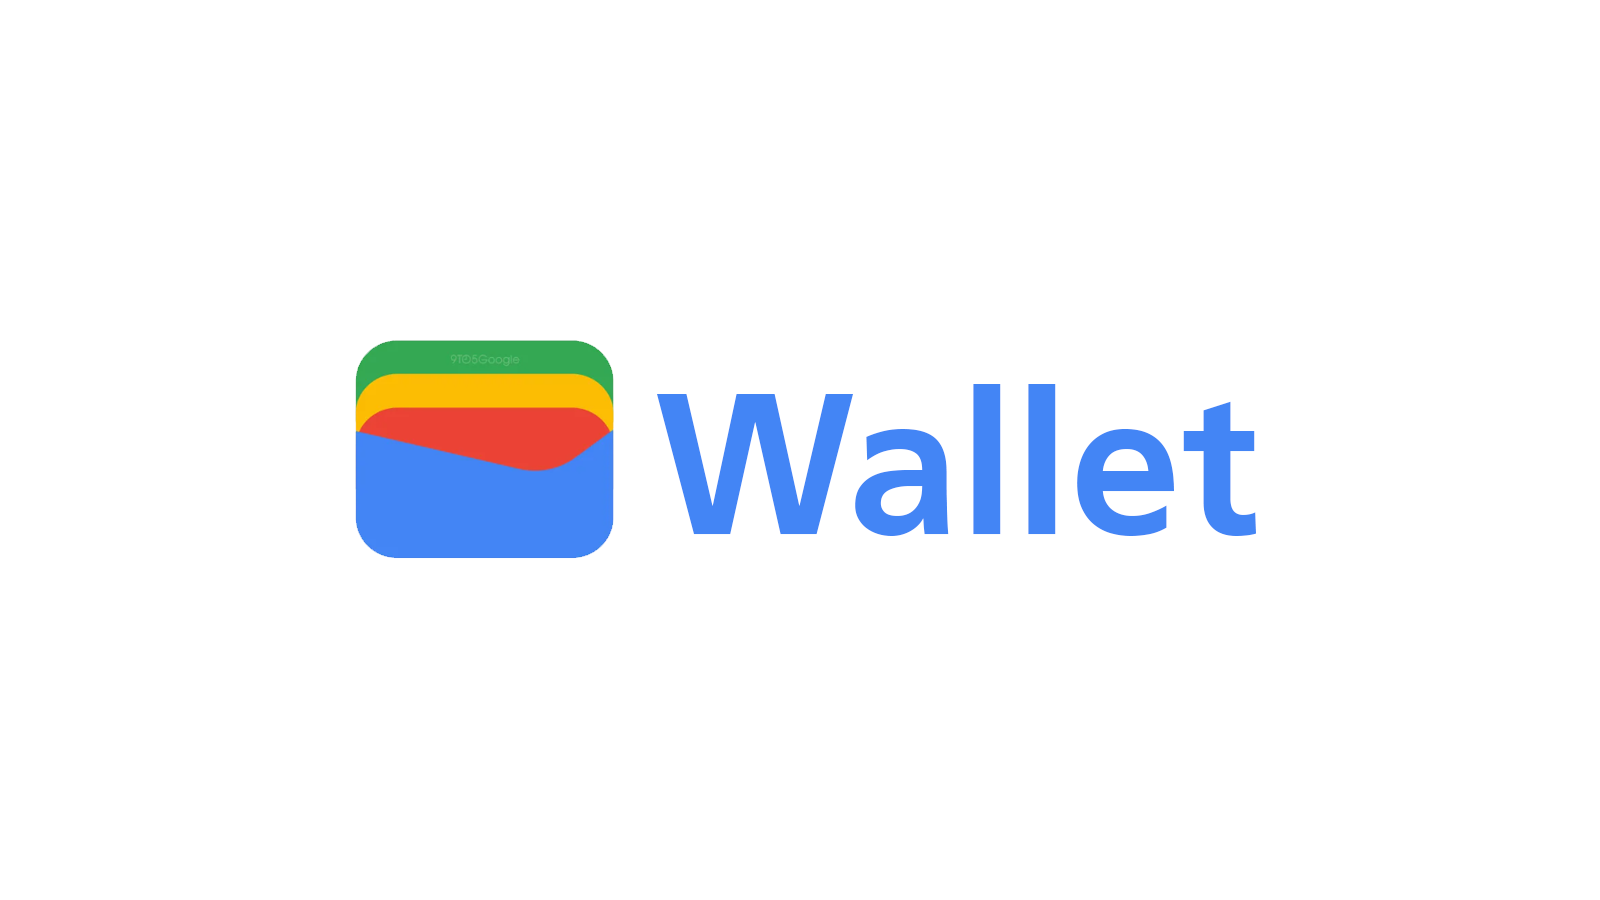 Google-Wallet